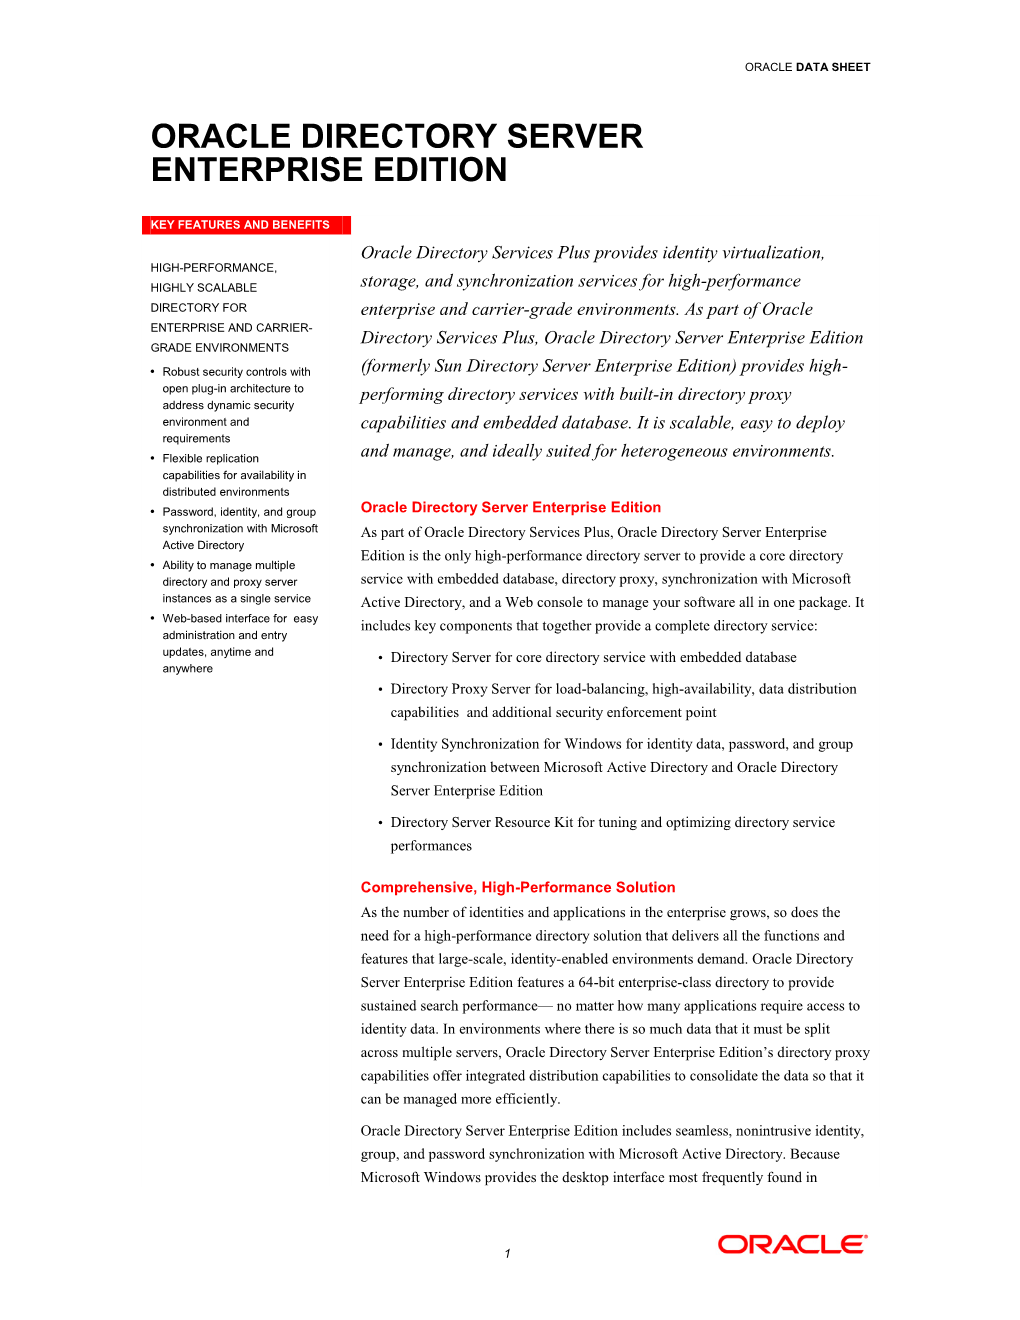 Oracle Directory Server Enterprise Edition